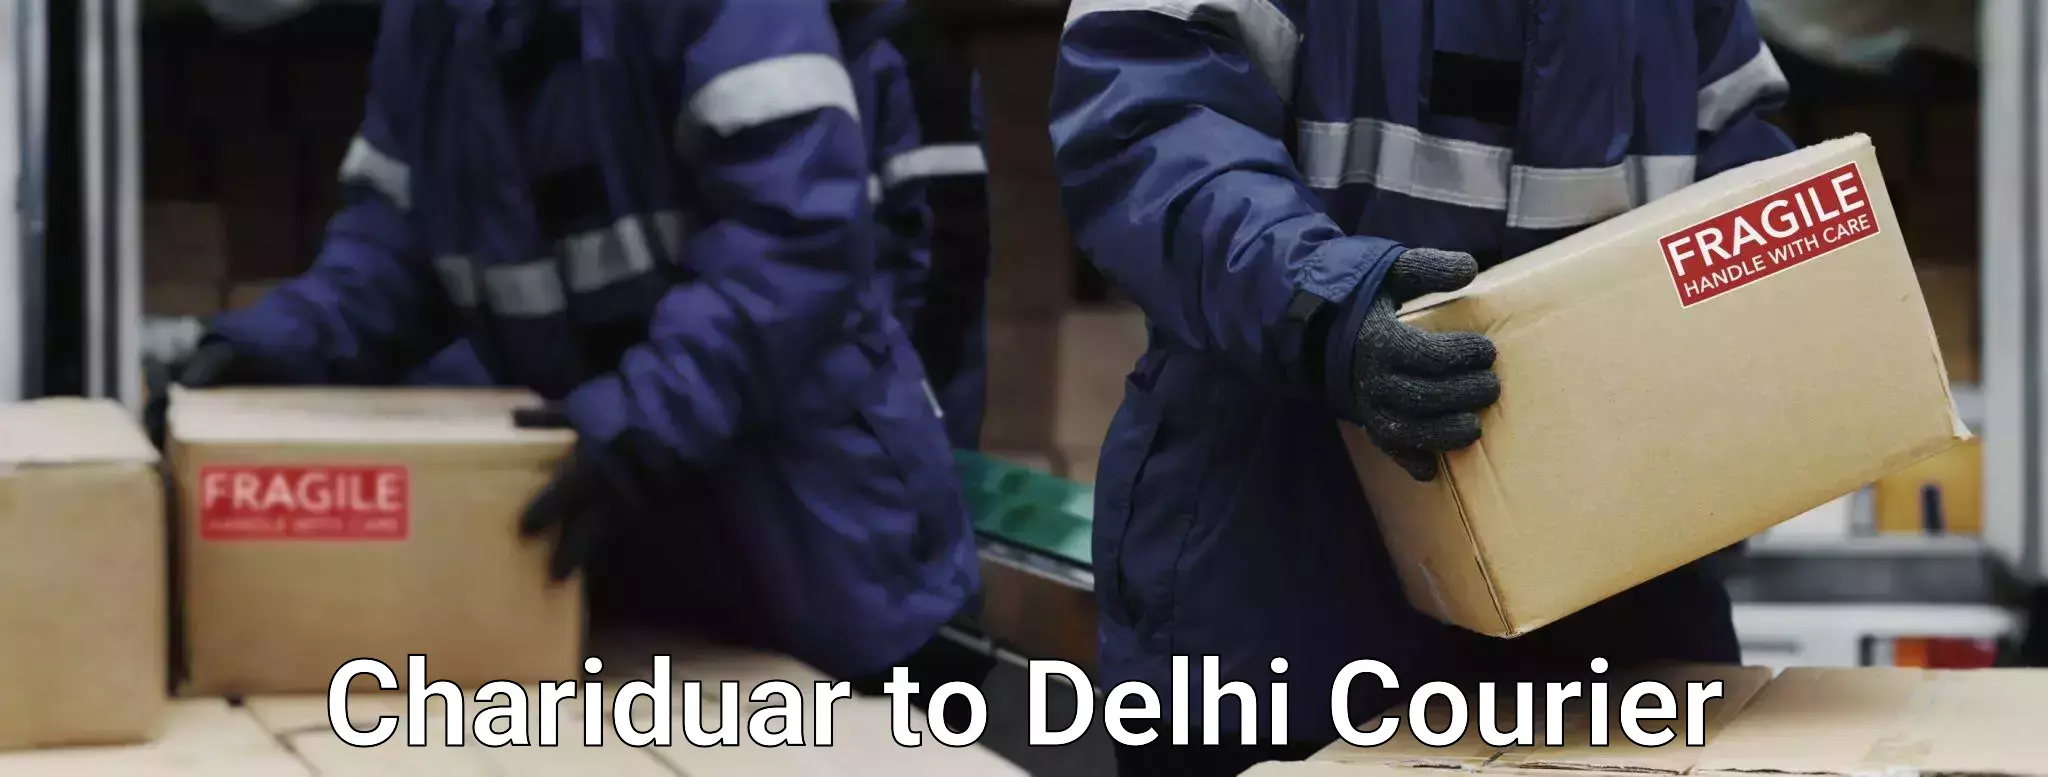 Luggage delivery app Chariduar to Delhi